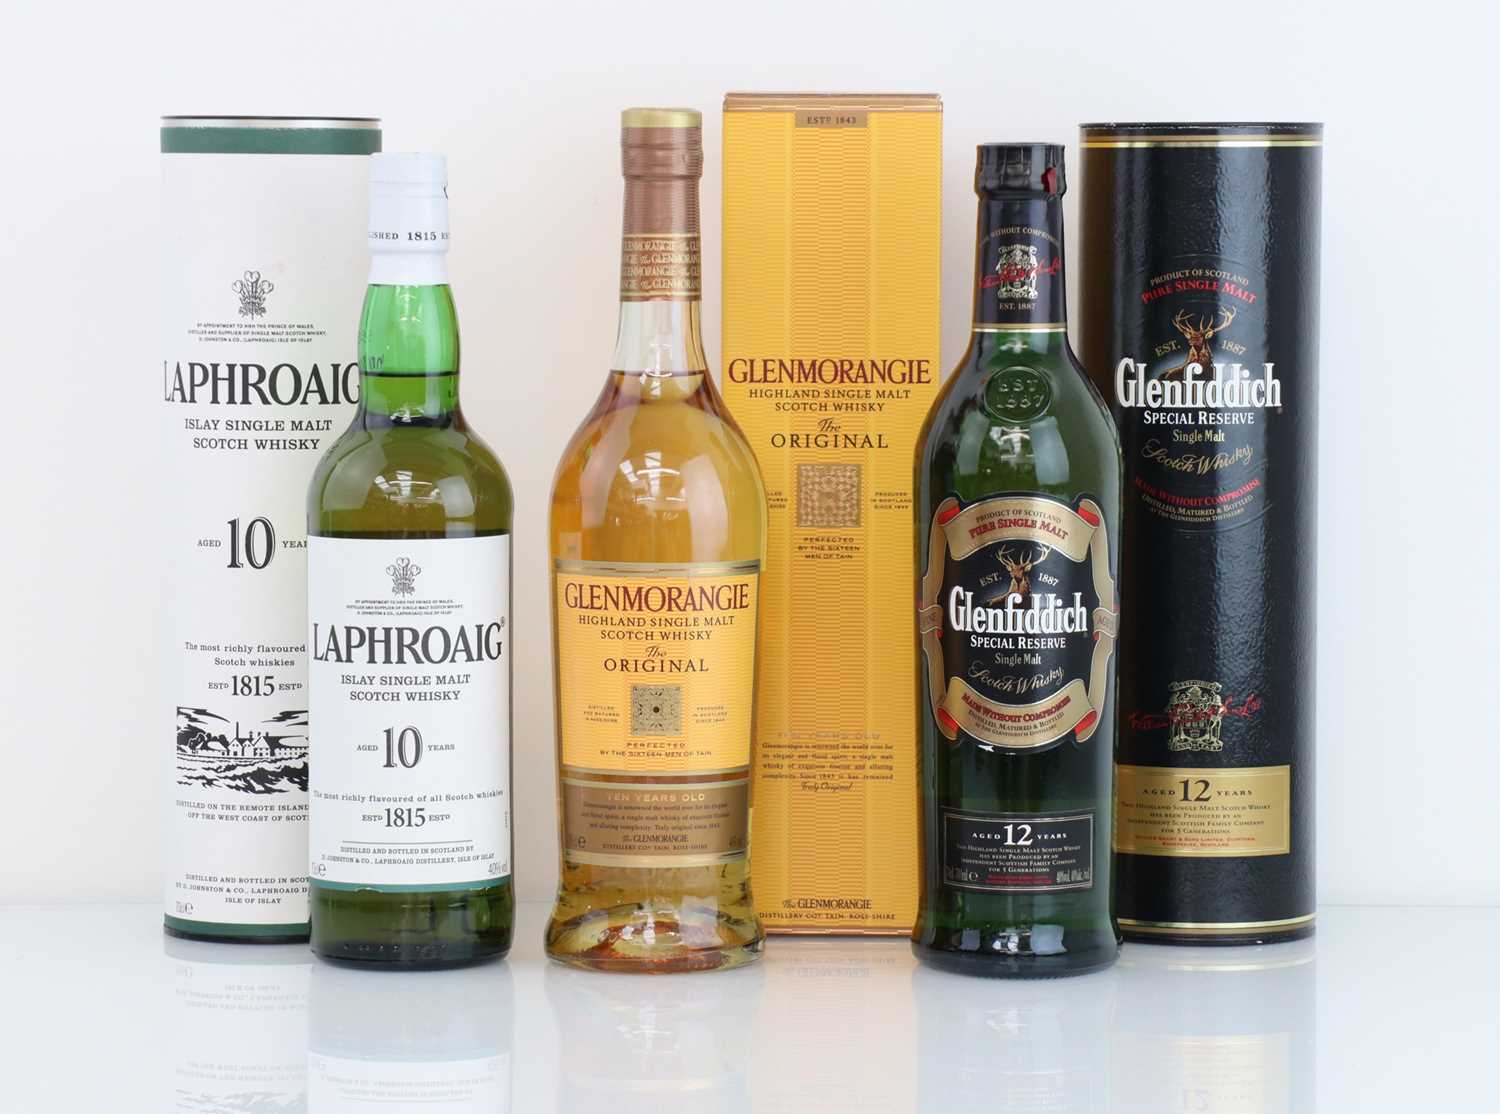 3 bottles, 1x Laphroaig 10 year old Islay Single Malt Scotch Whisky with carton 40% 70cl, 1x